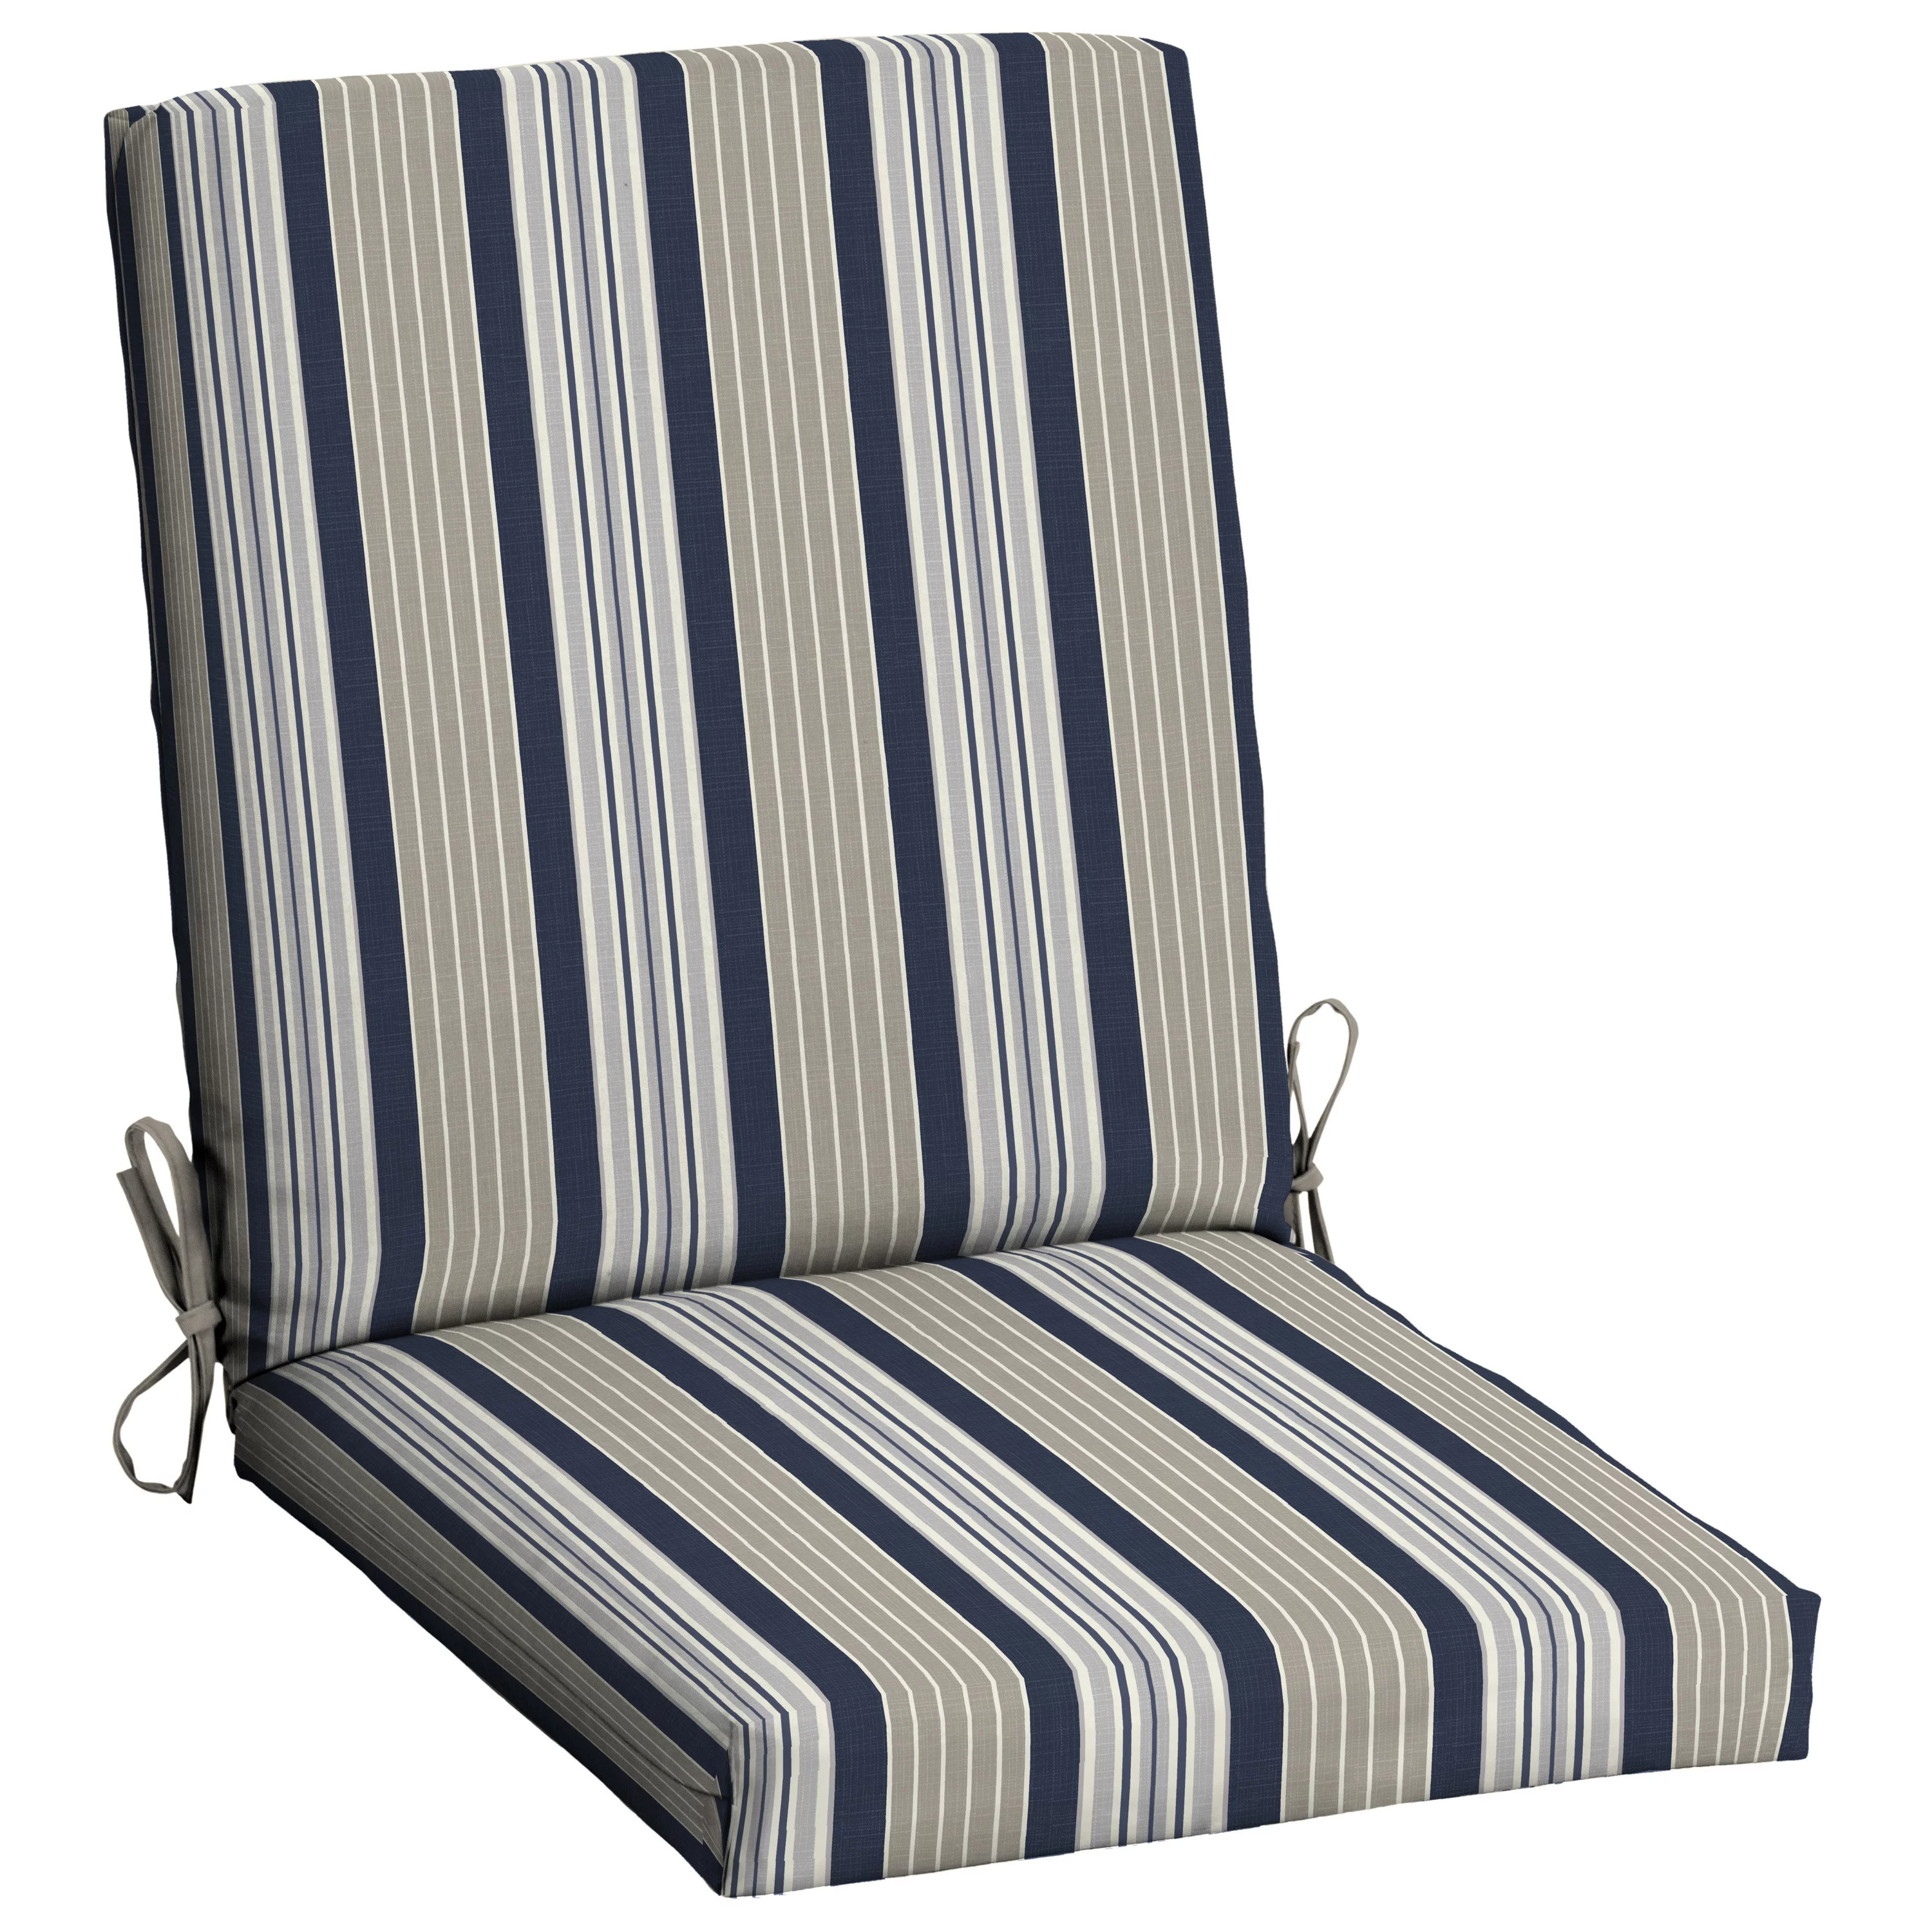 Mainstays 43" x 20" Navy Stripe Rectangle Patio Chair Cushion, 1 Piece